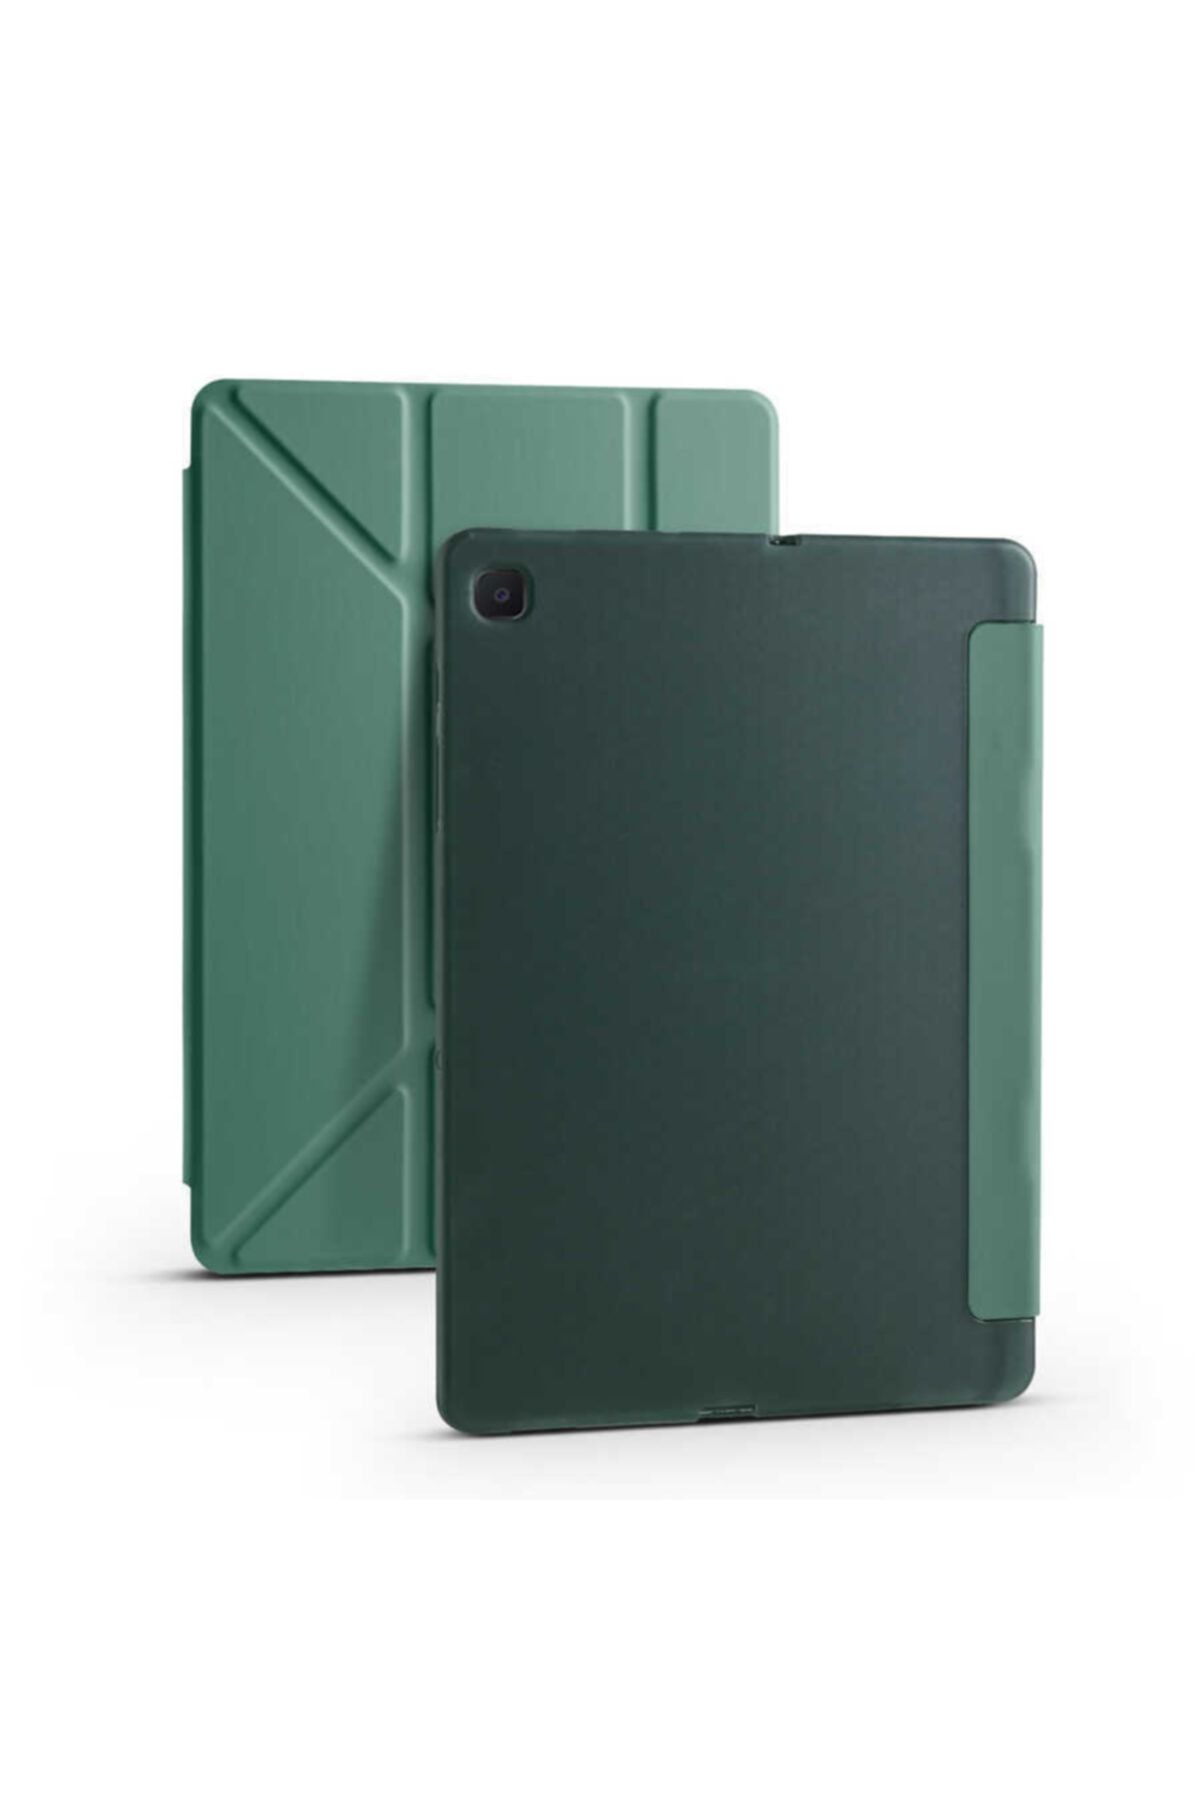 HTstore Galaxy Tab A7 10.4 T500 2020 Kılıf Tri Folding Kalem Bölmeli Standlı Kılıf-koyu Yeşil